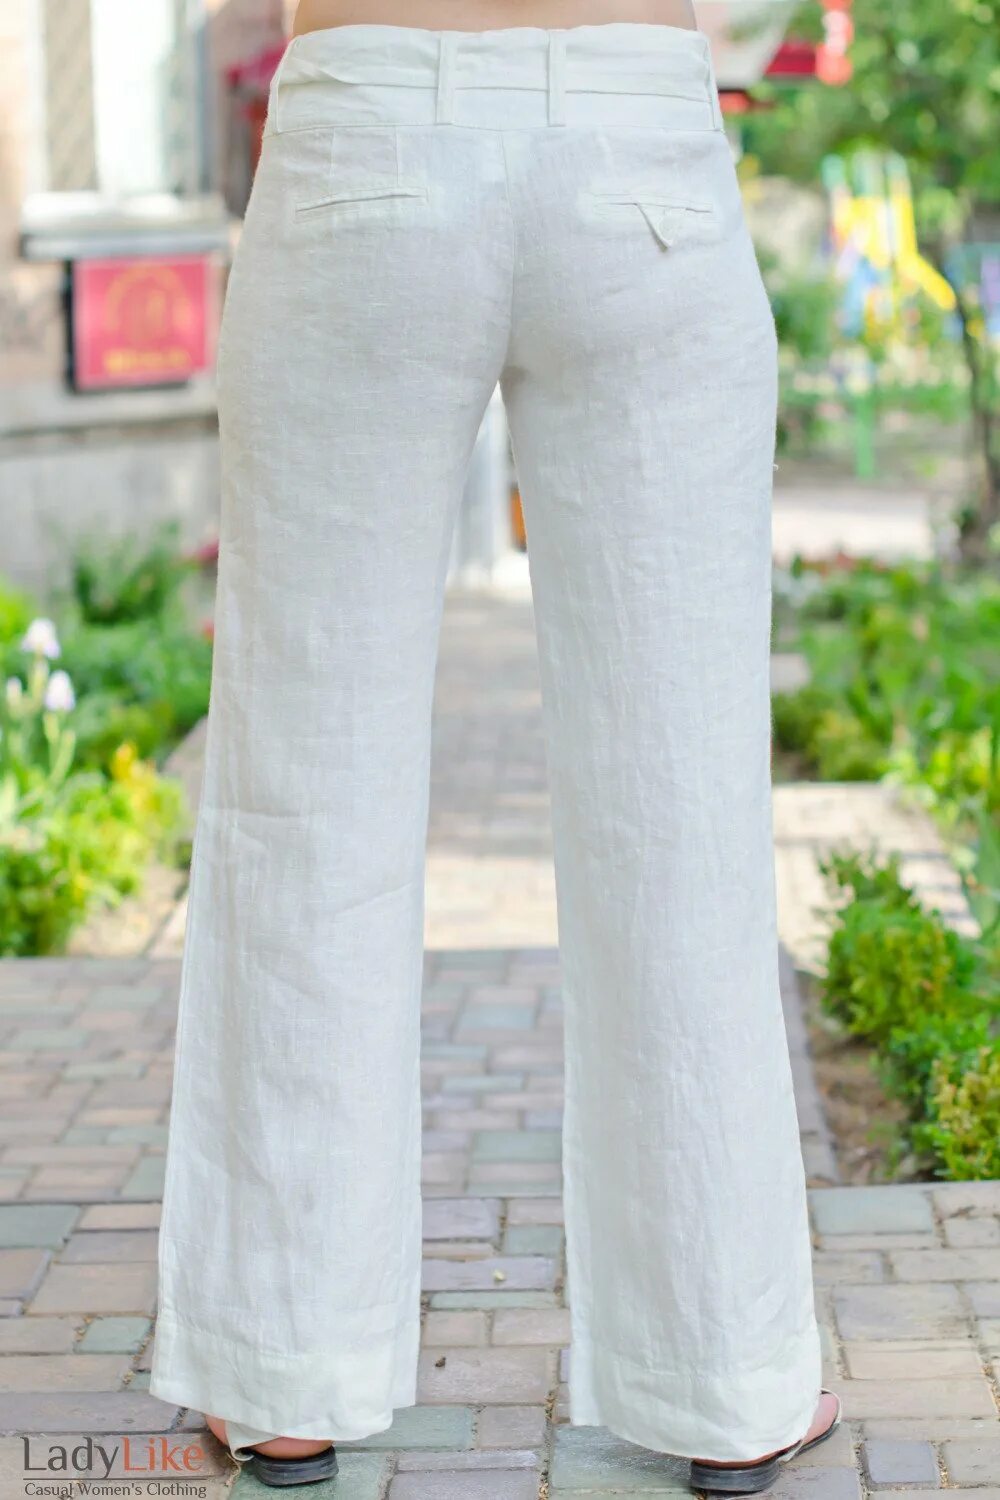 Валберис белые брюки. Валберис льняные брюки женские. Валберис белые брюки летние женские. Валберис брюки женские летние льняные. Льняные брюки женские.